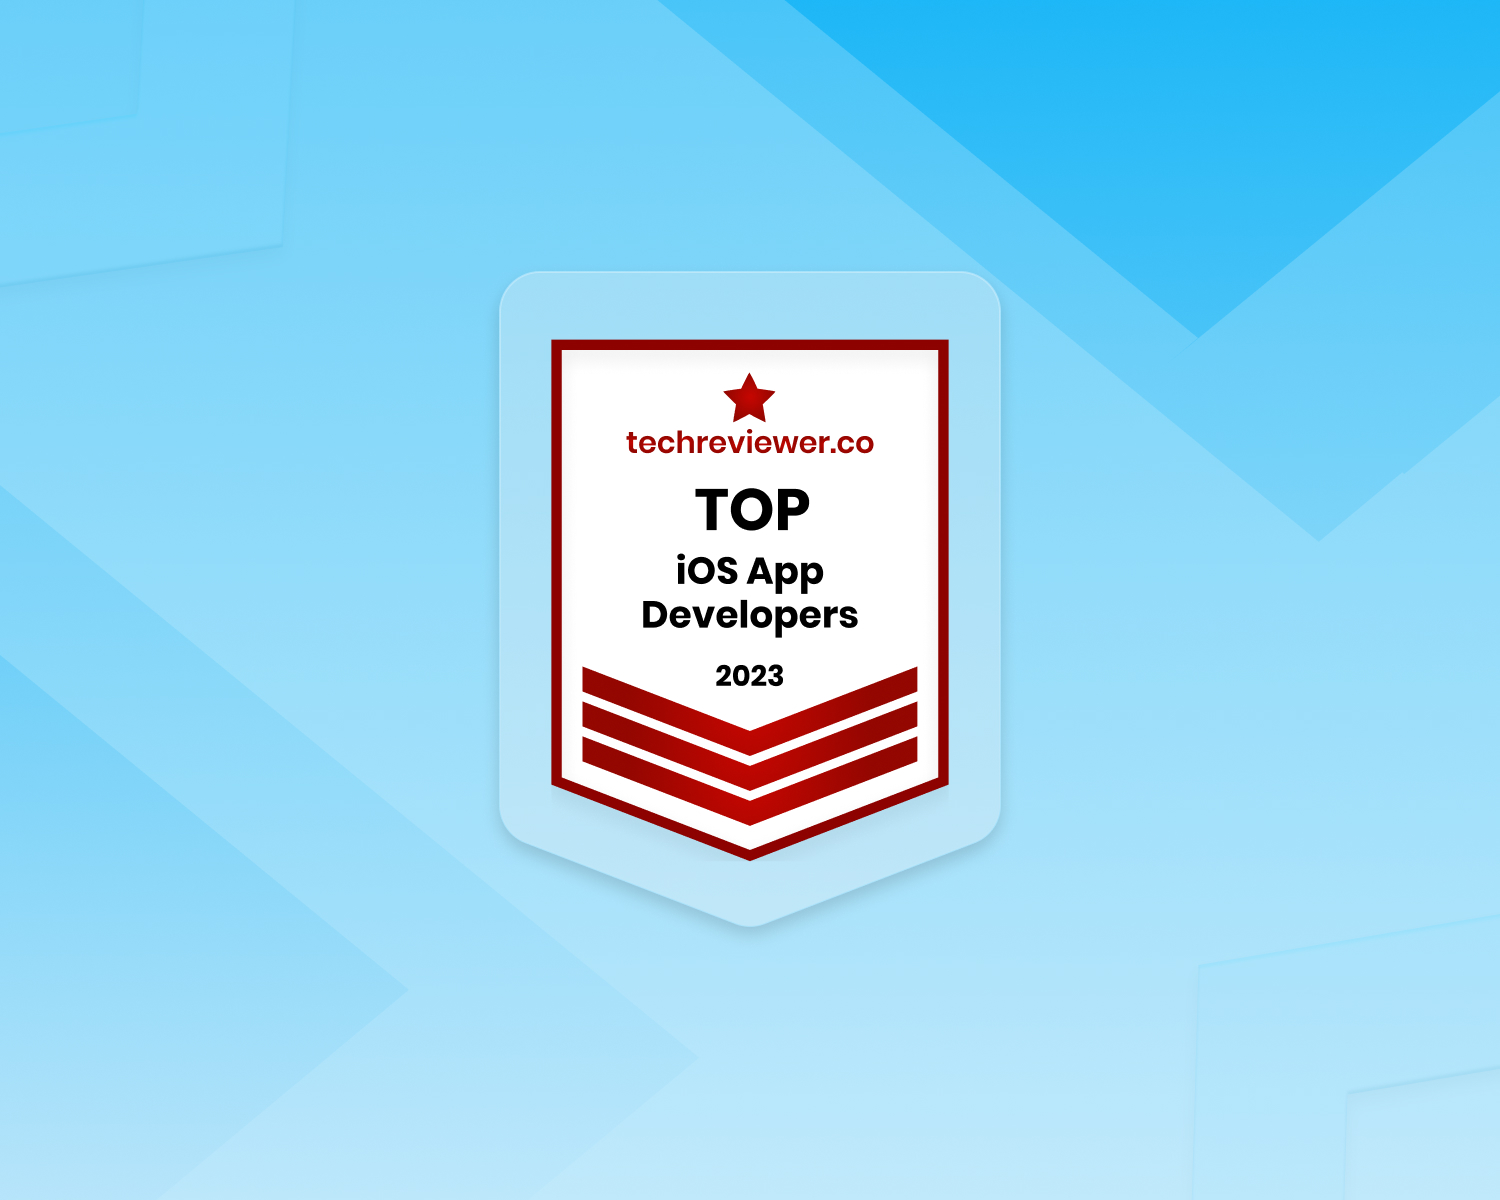 NIX Recognized Among Top 100 iOS App Development Companies of 2023